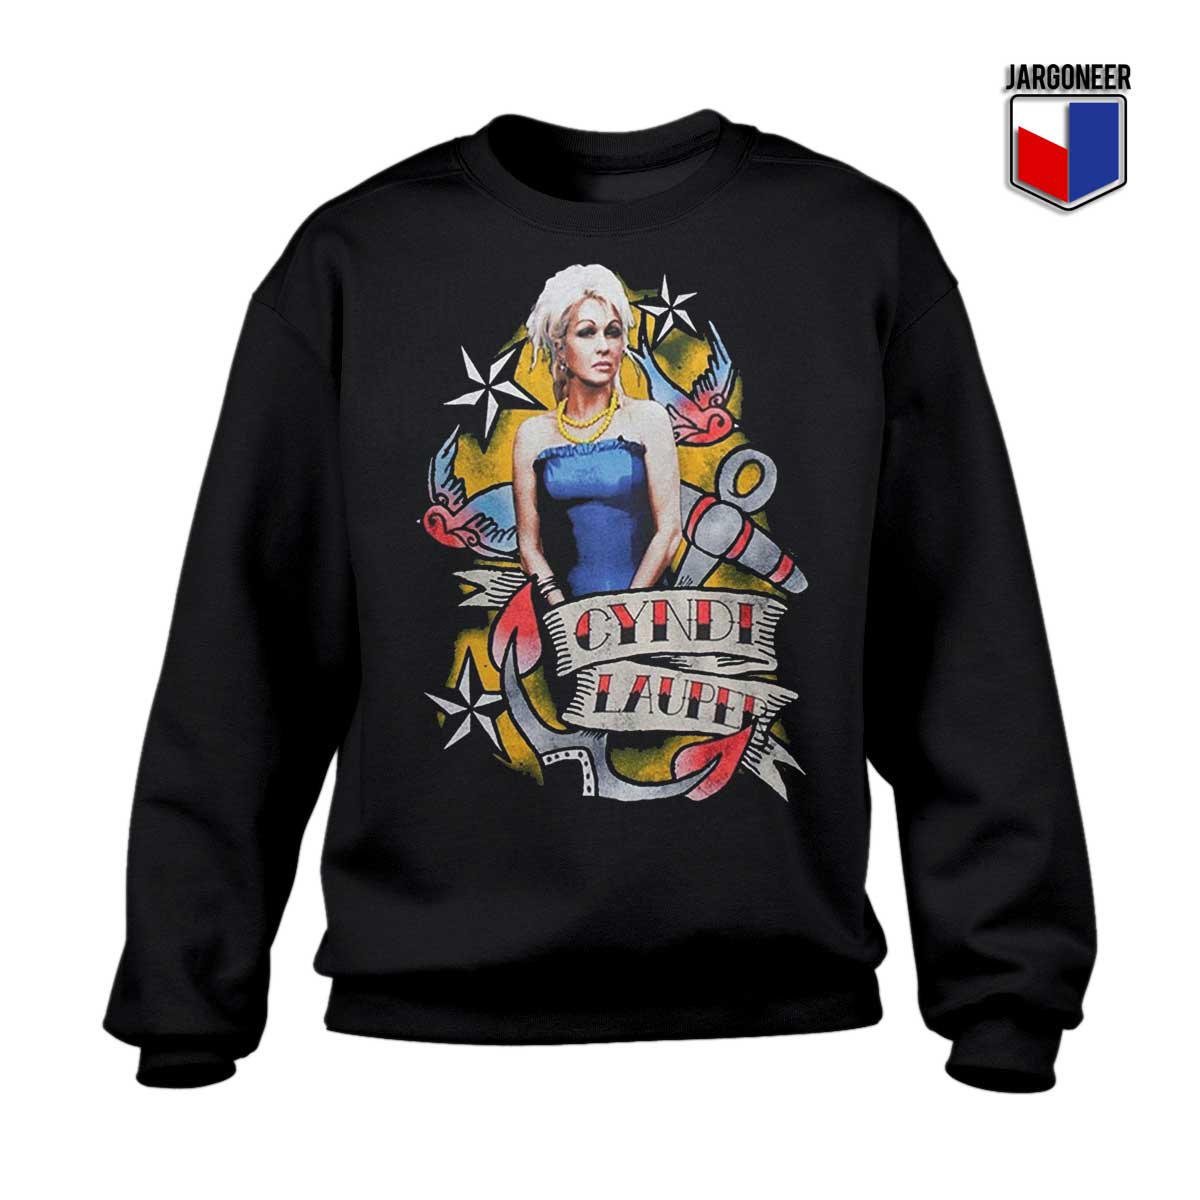 Old Glory Cyndi Lauper Sweatshirt - Shop Unique Graphic Cool Shirt Designs